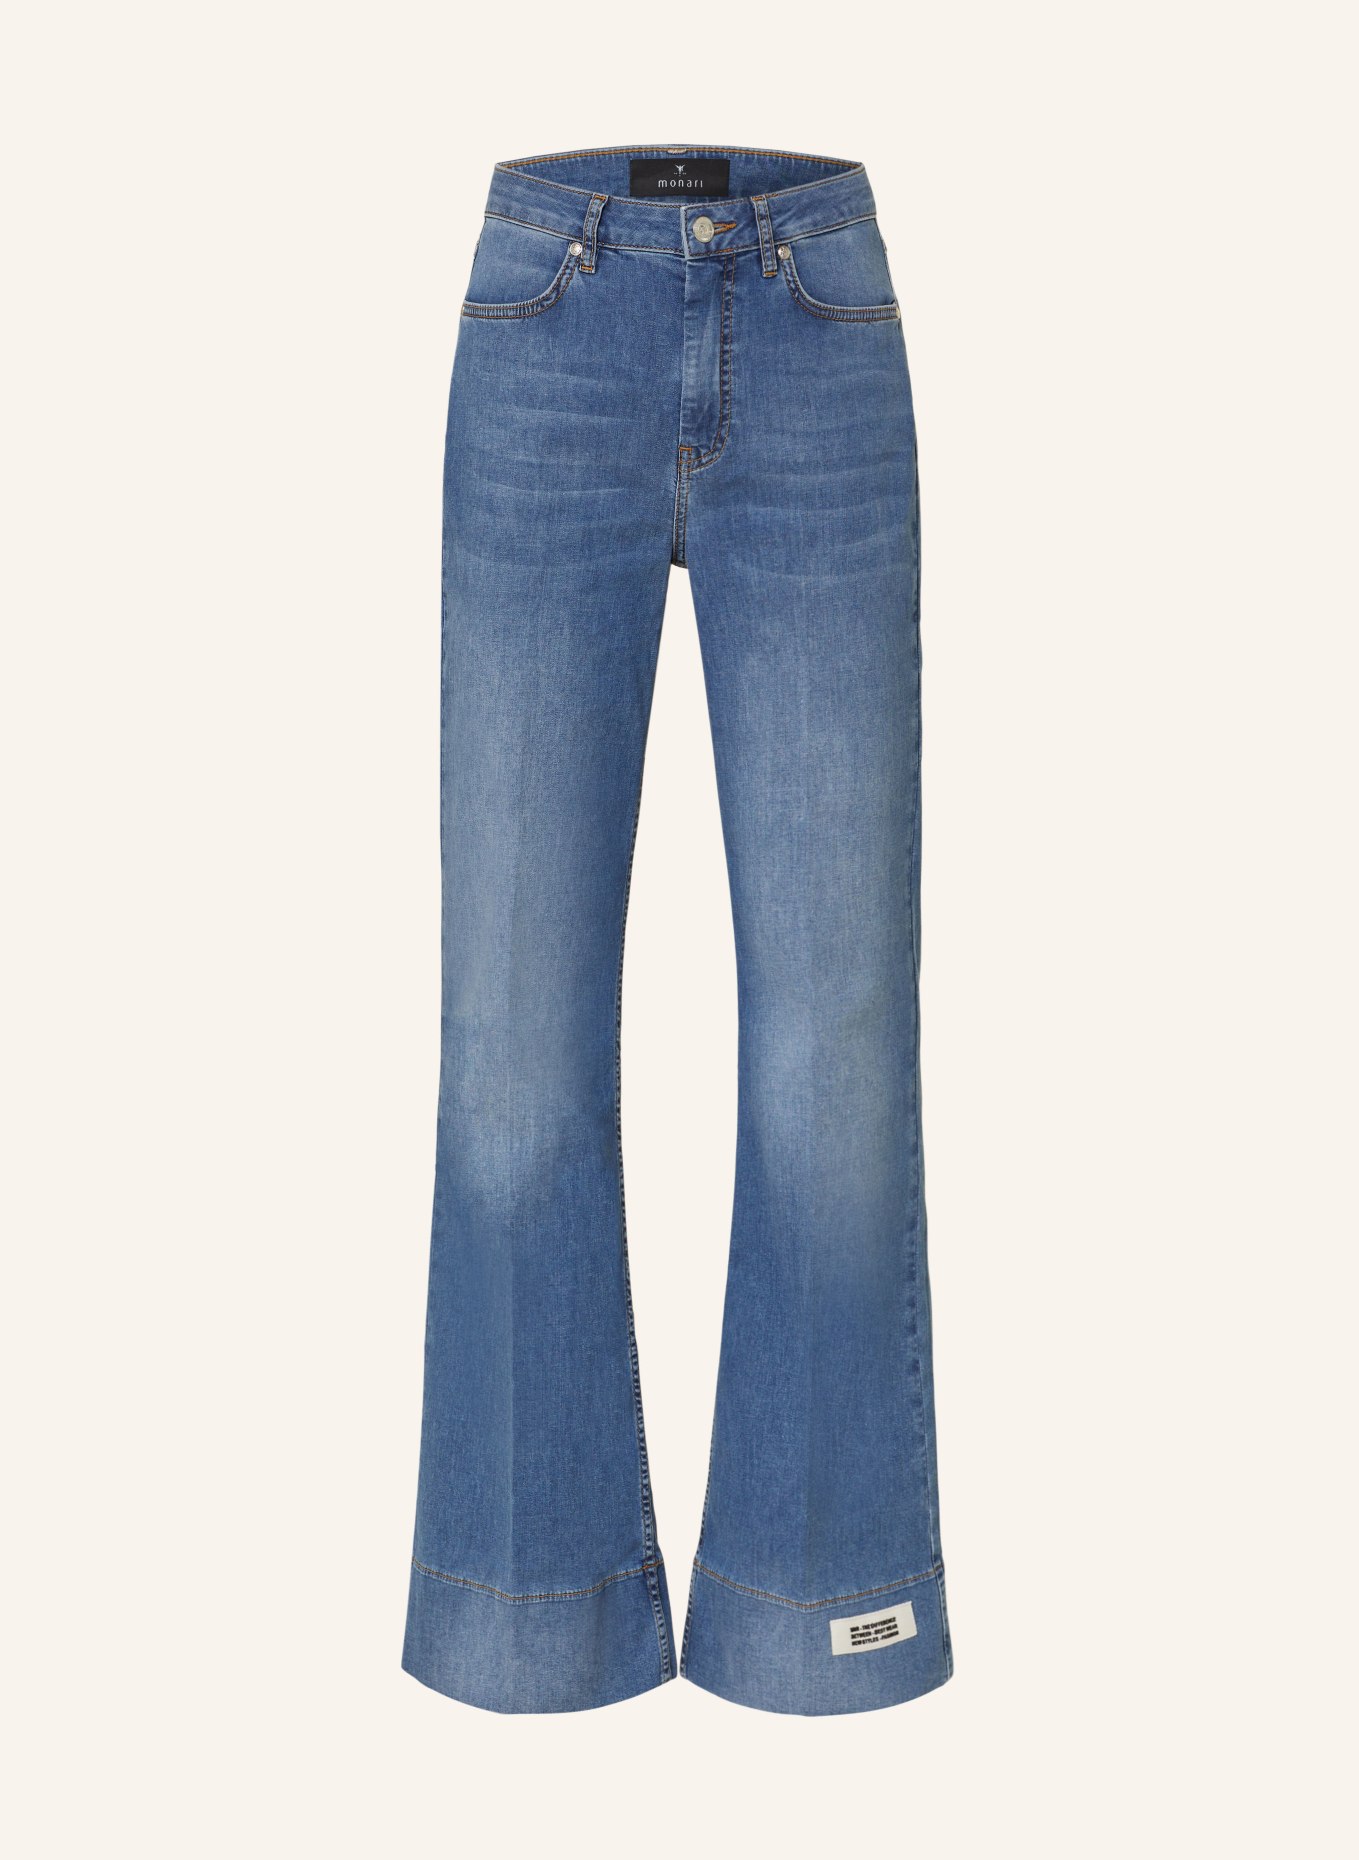 monari Bootcut Jeans, Farbe: 750 jeans (Bild 1)